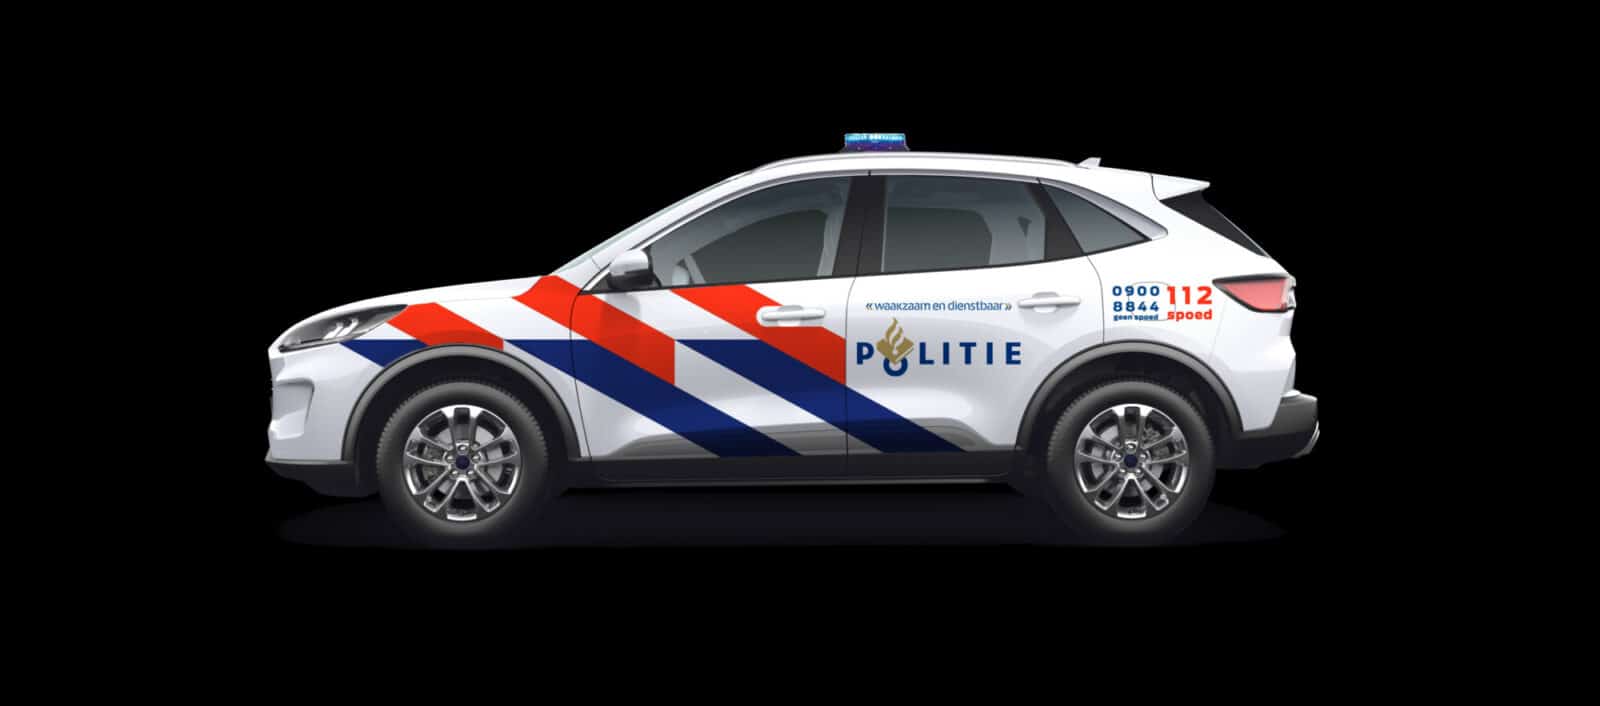 Politie Nederland Ford Kuga nieuw basispolitievoertuig